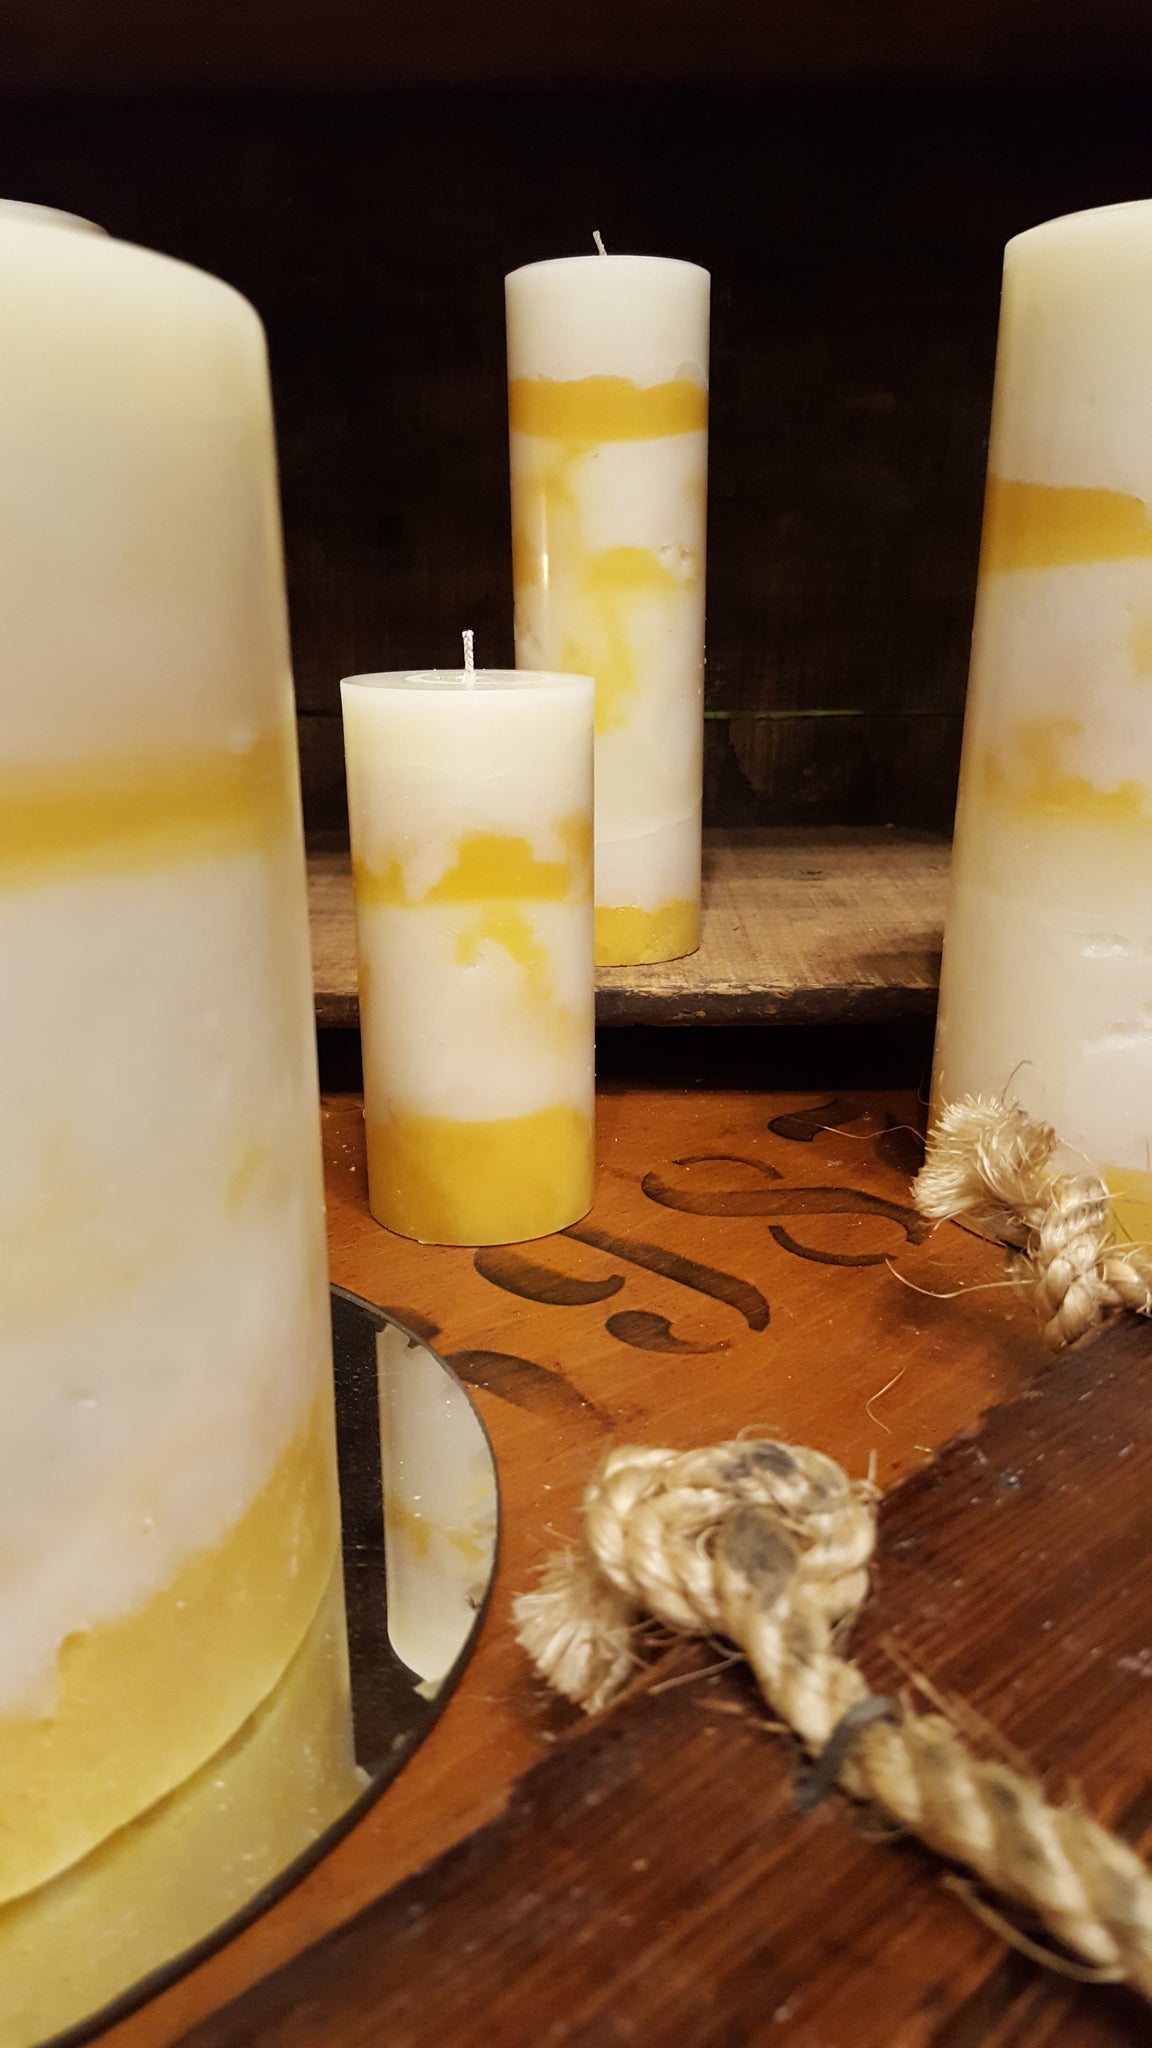 Buy IVY Paraffin Wax Scented Pillar Candle 3 x 3 Inch - Vanilla